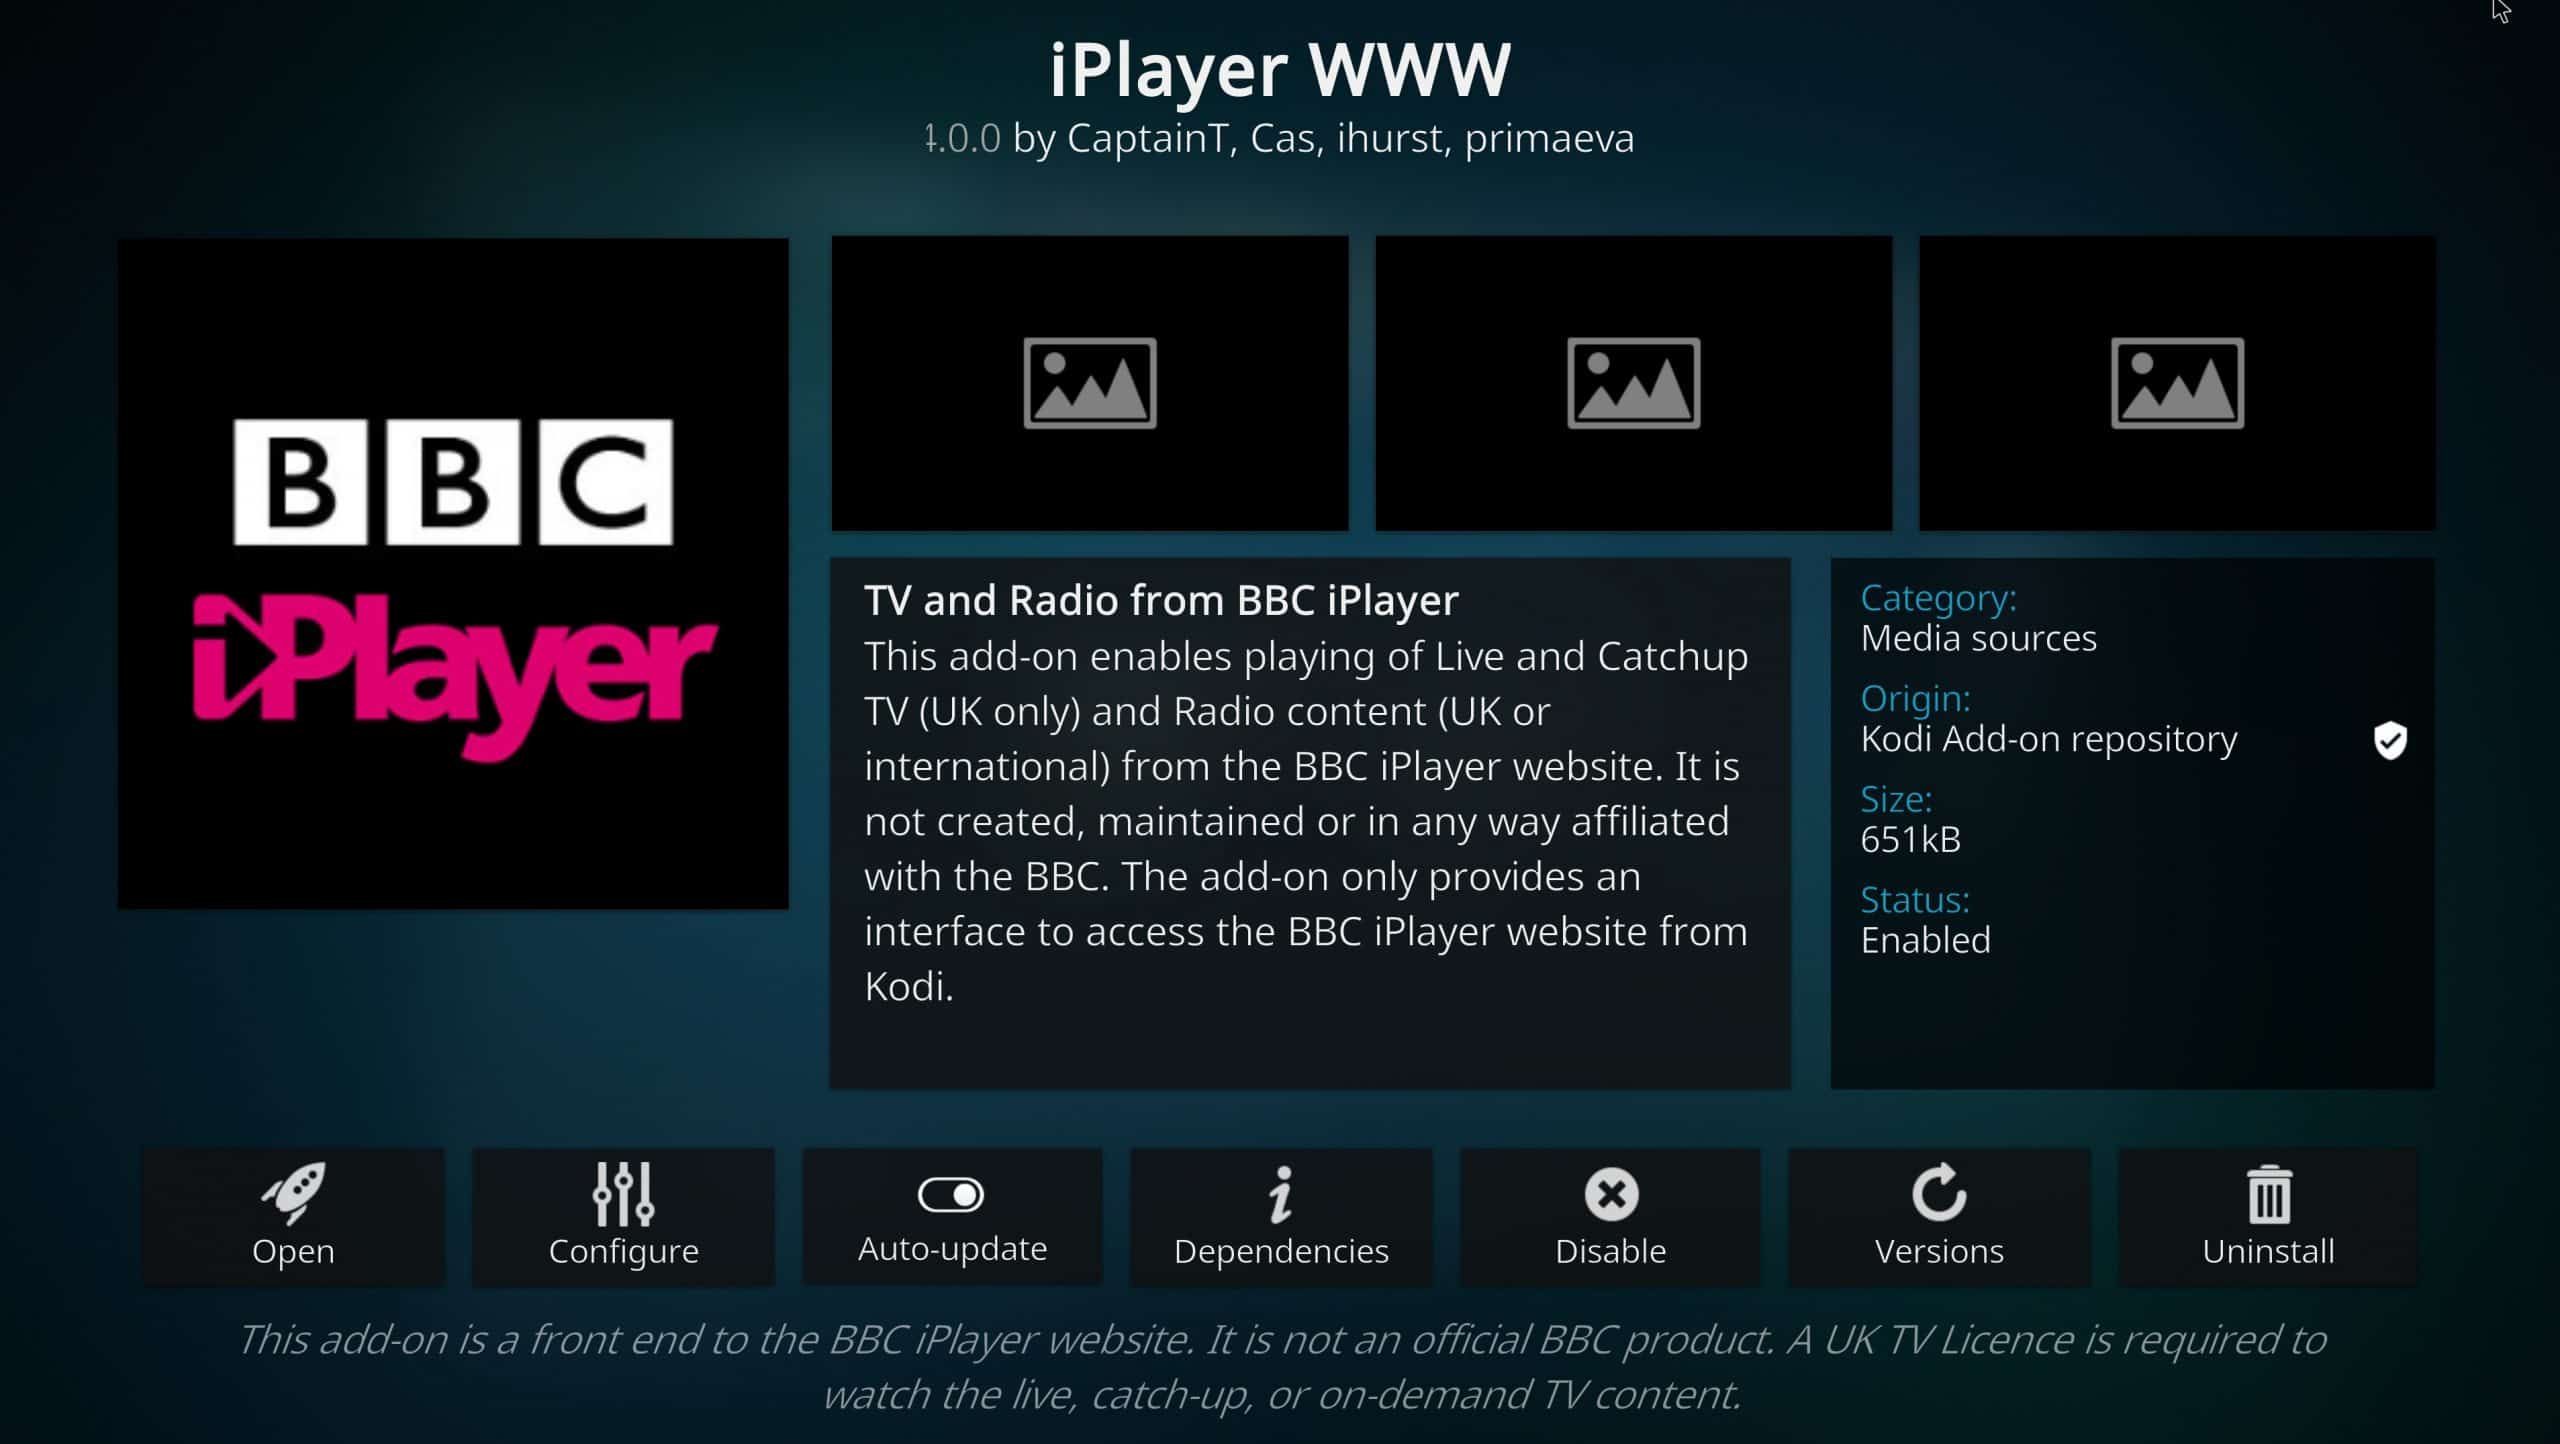 BBC iPlayer WWW kodi addon v4